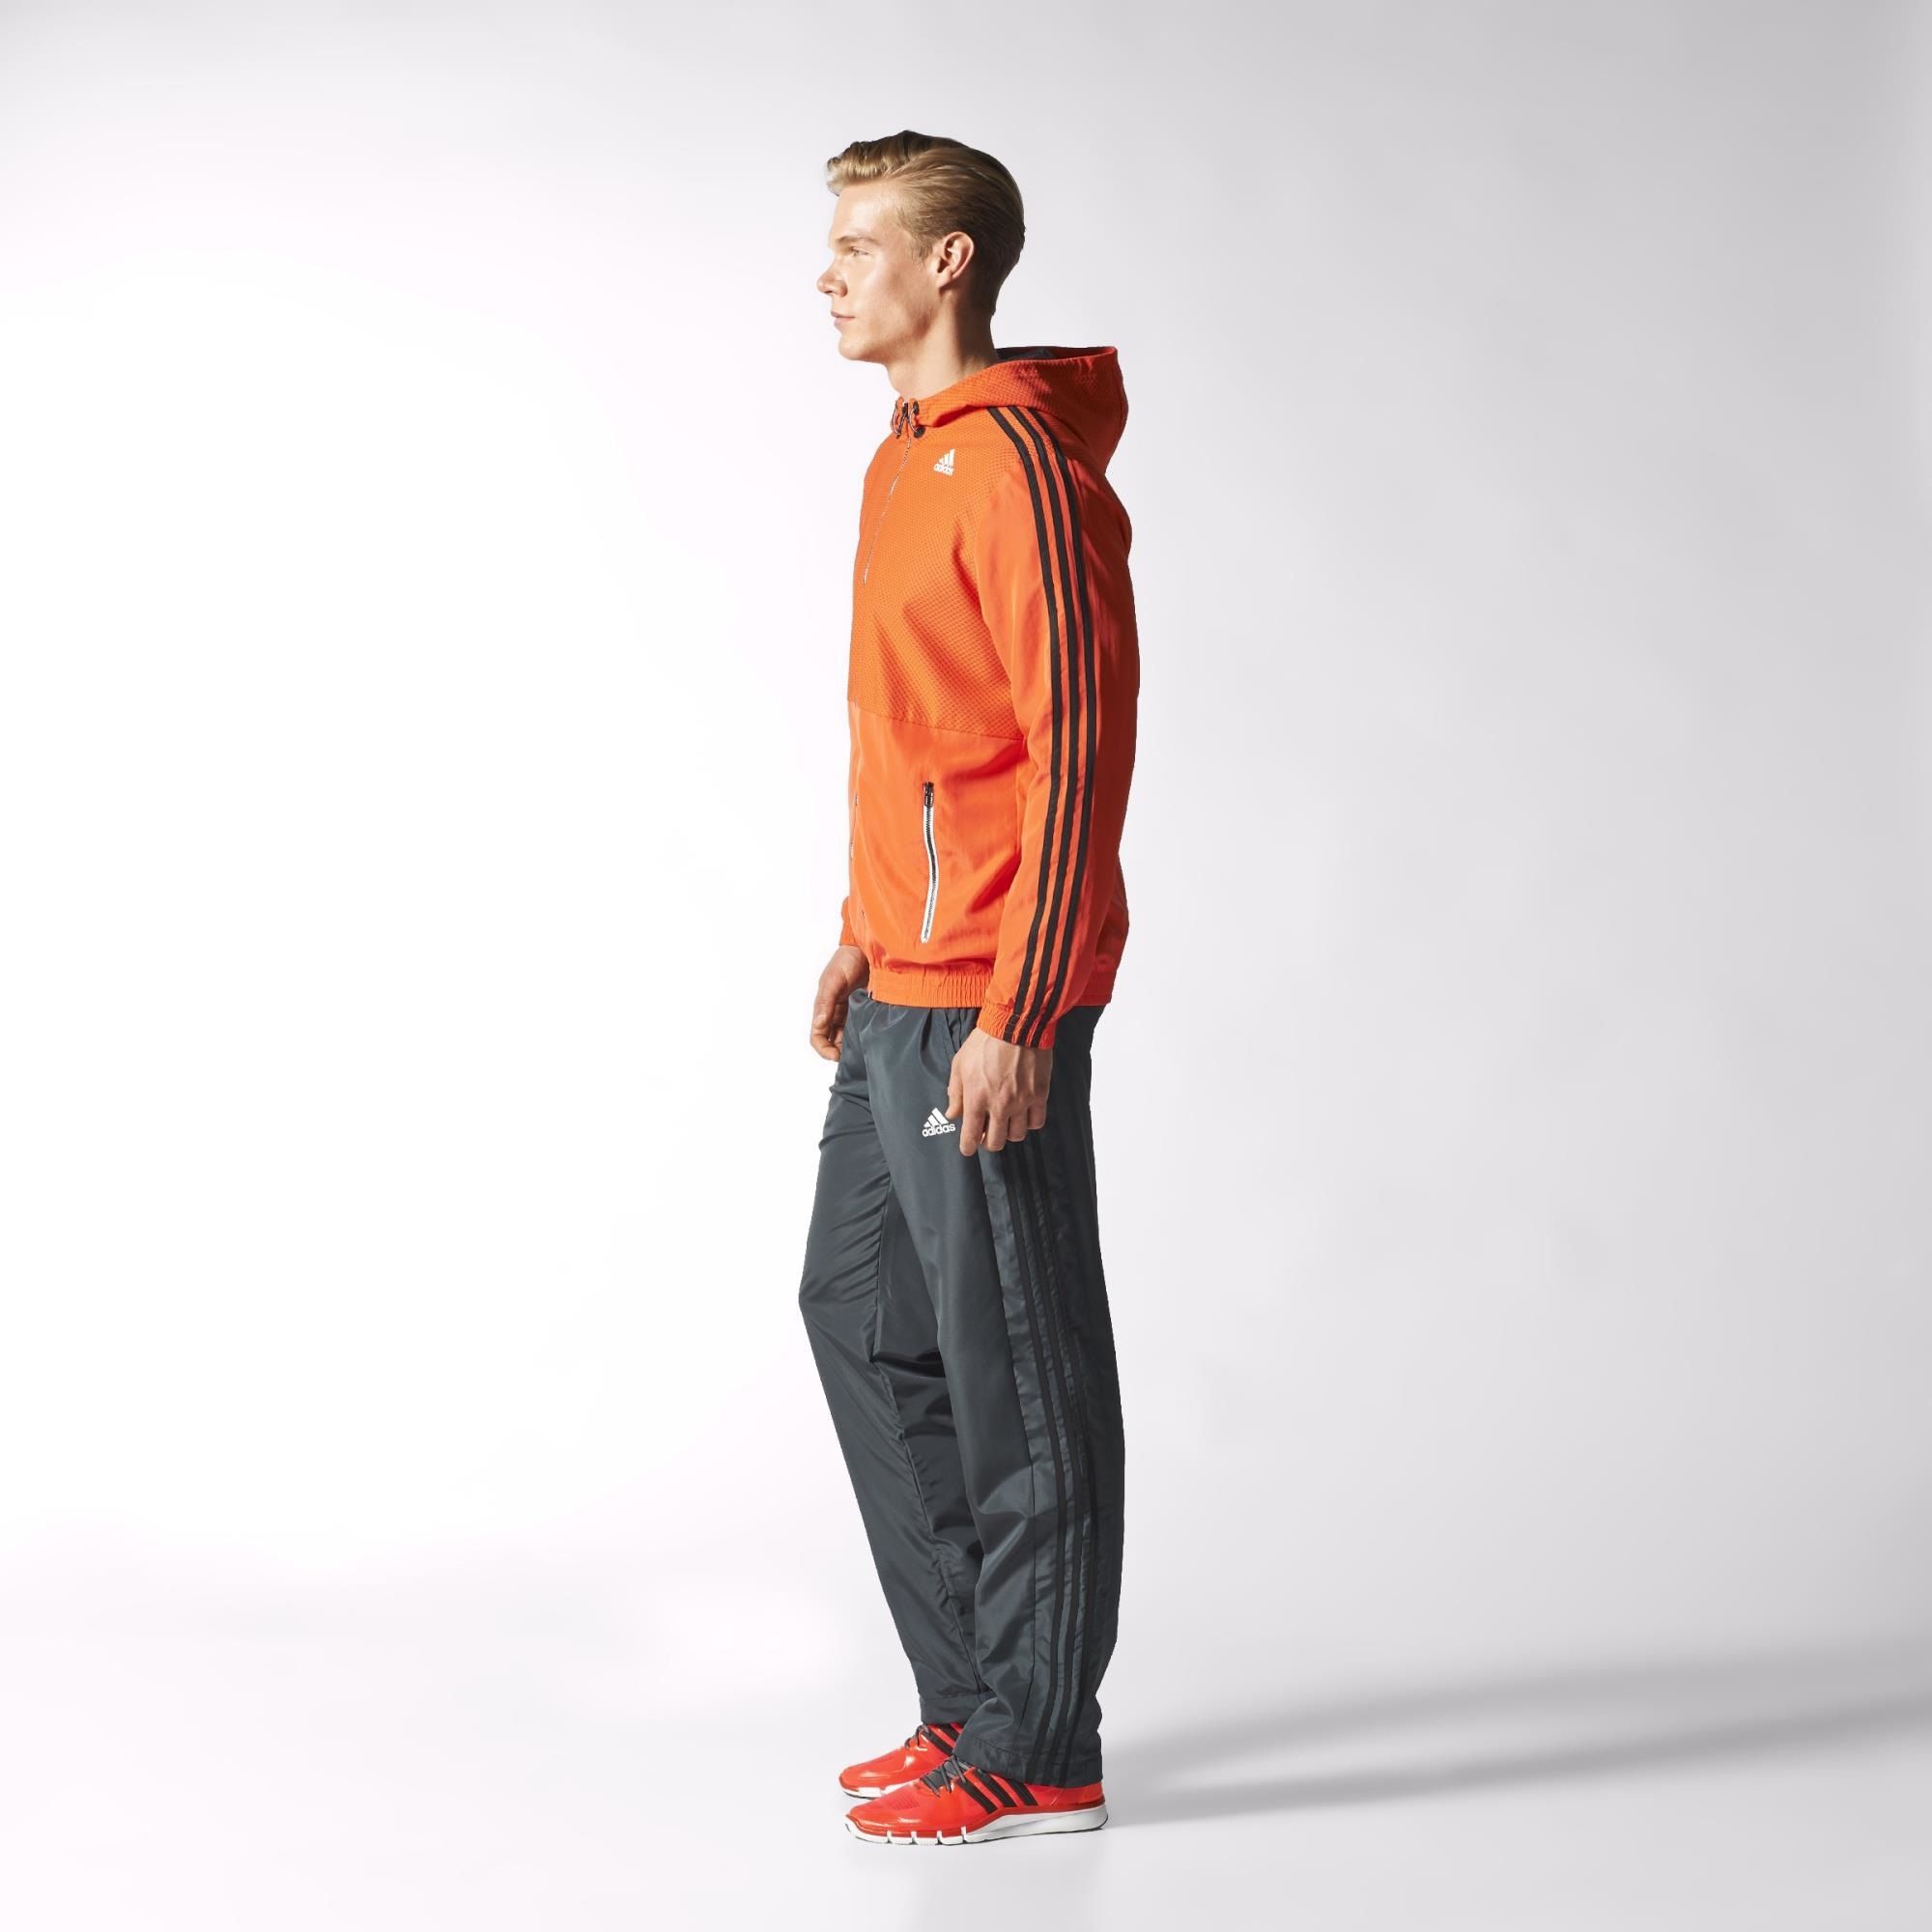 Adidas Hombre Training Climalite (naranja/grisoscuro)